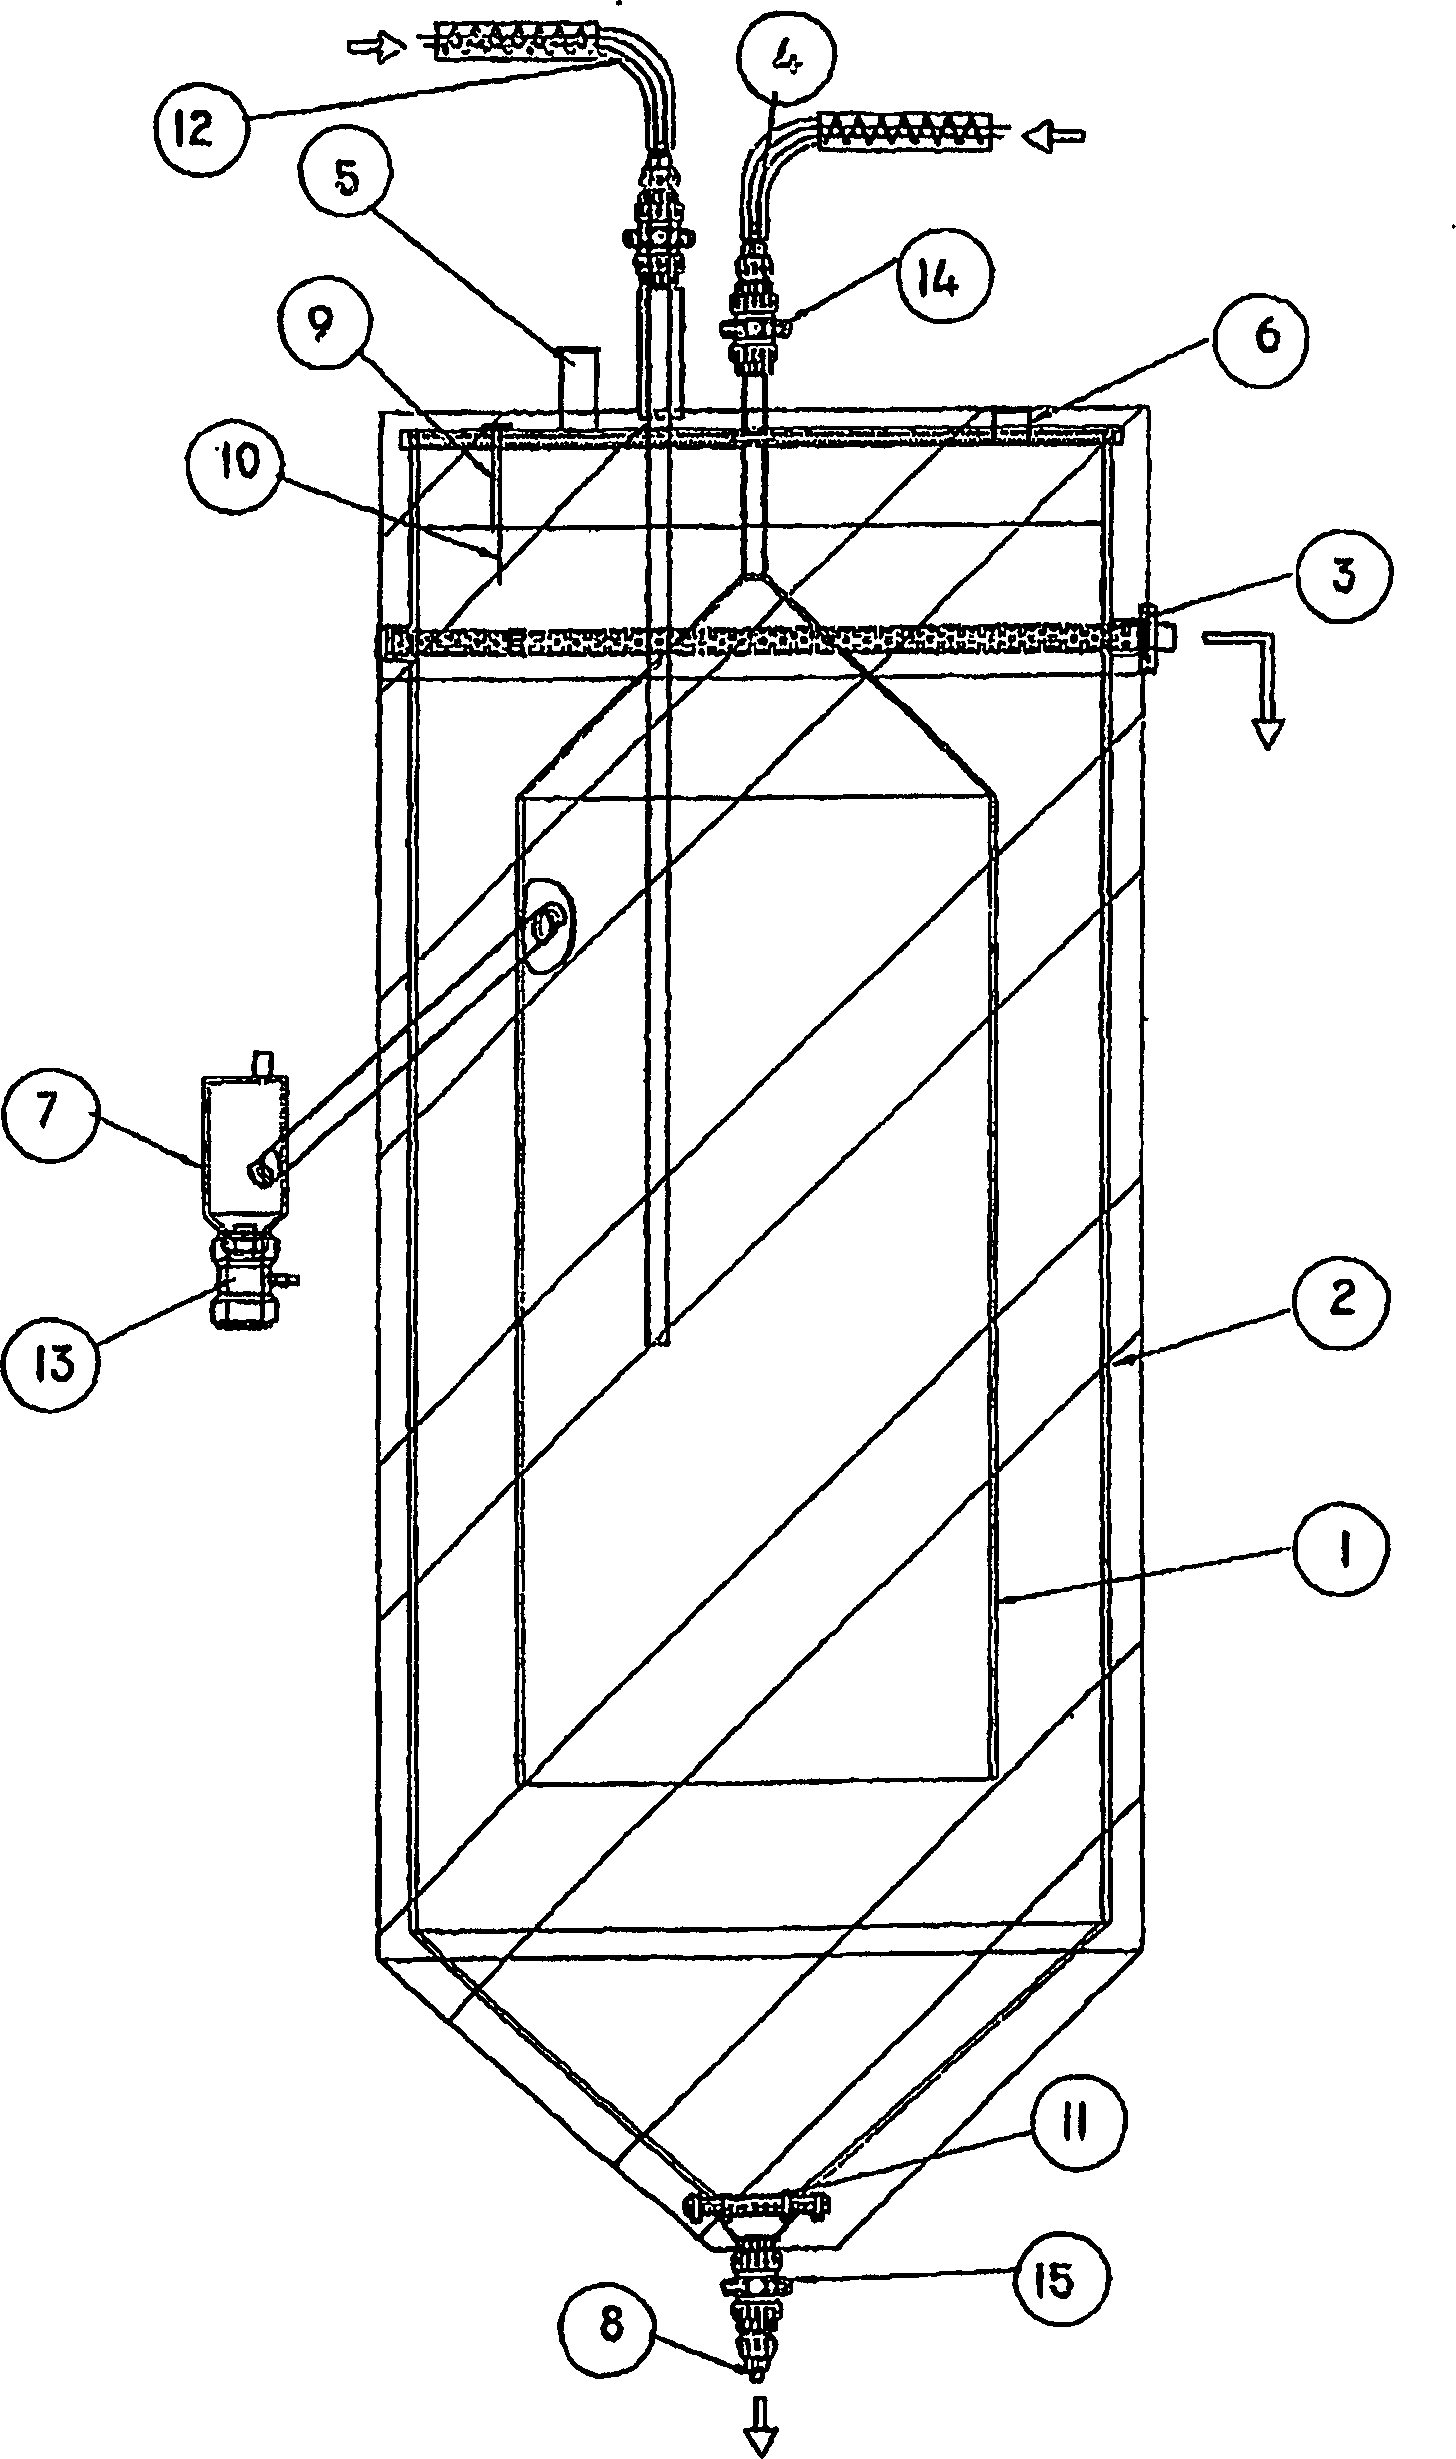 Method and apparatus for desorbing material